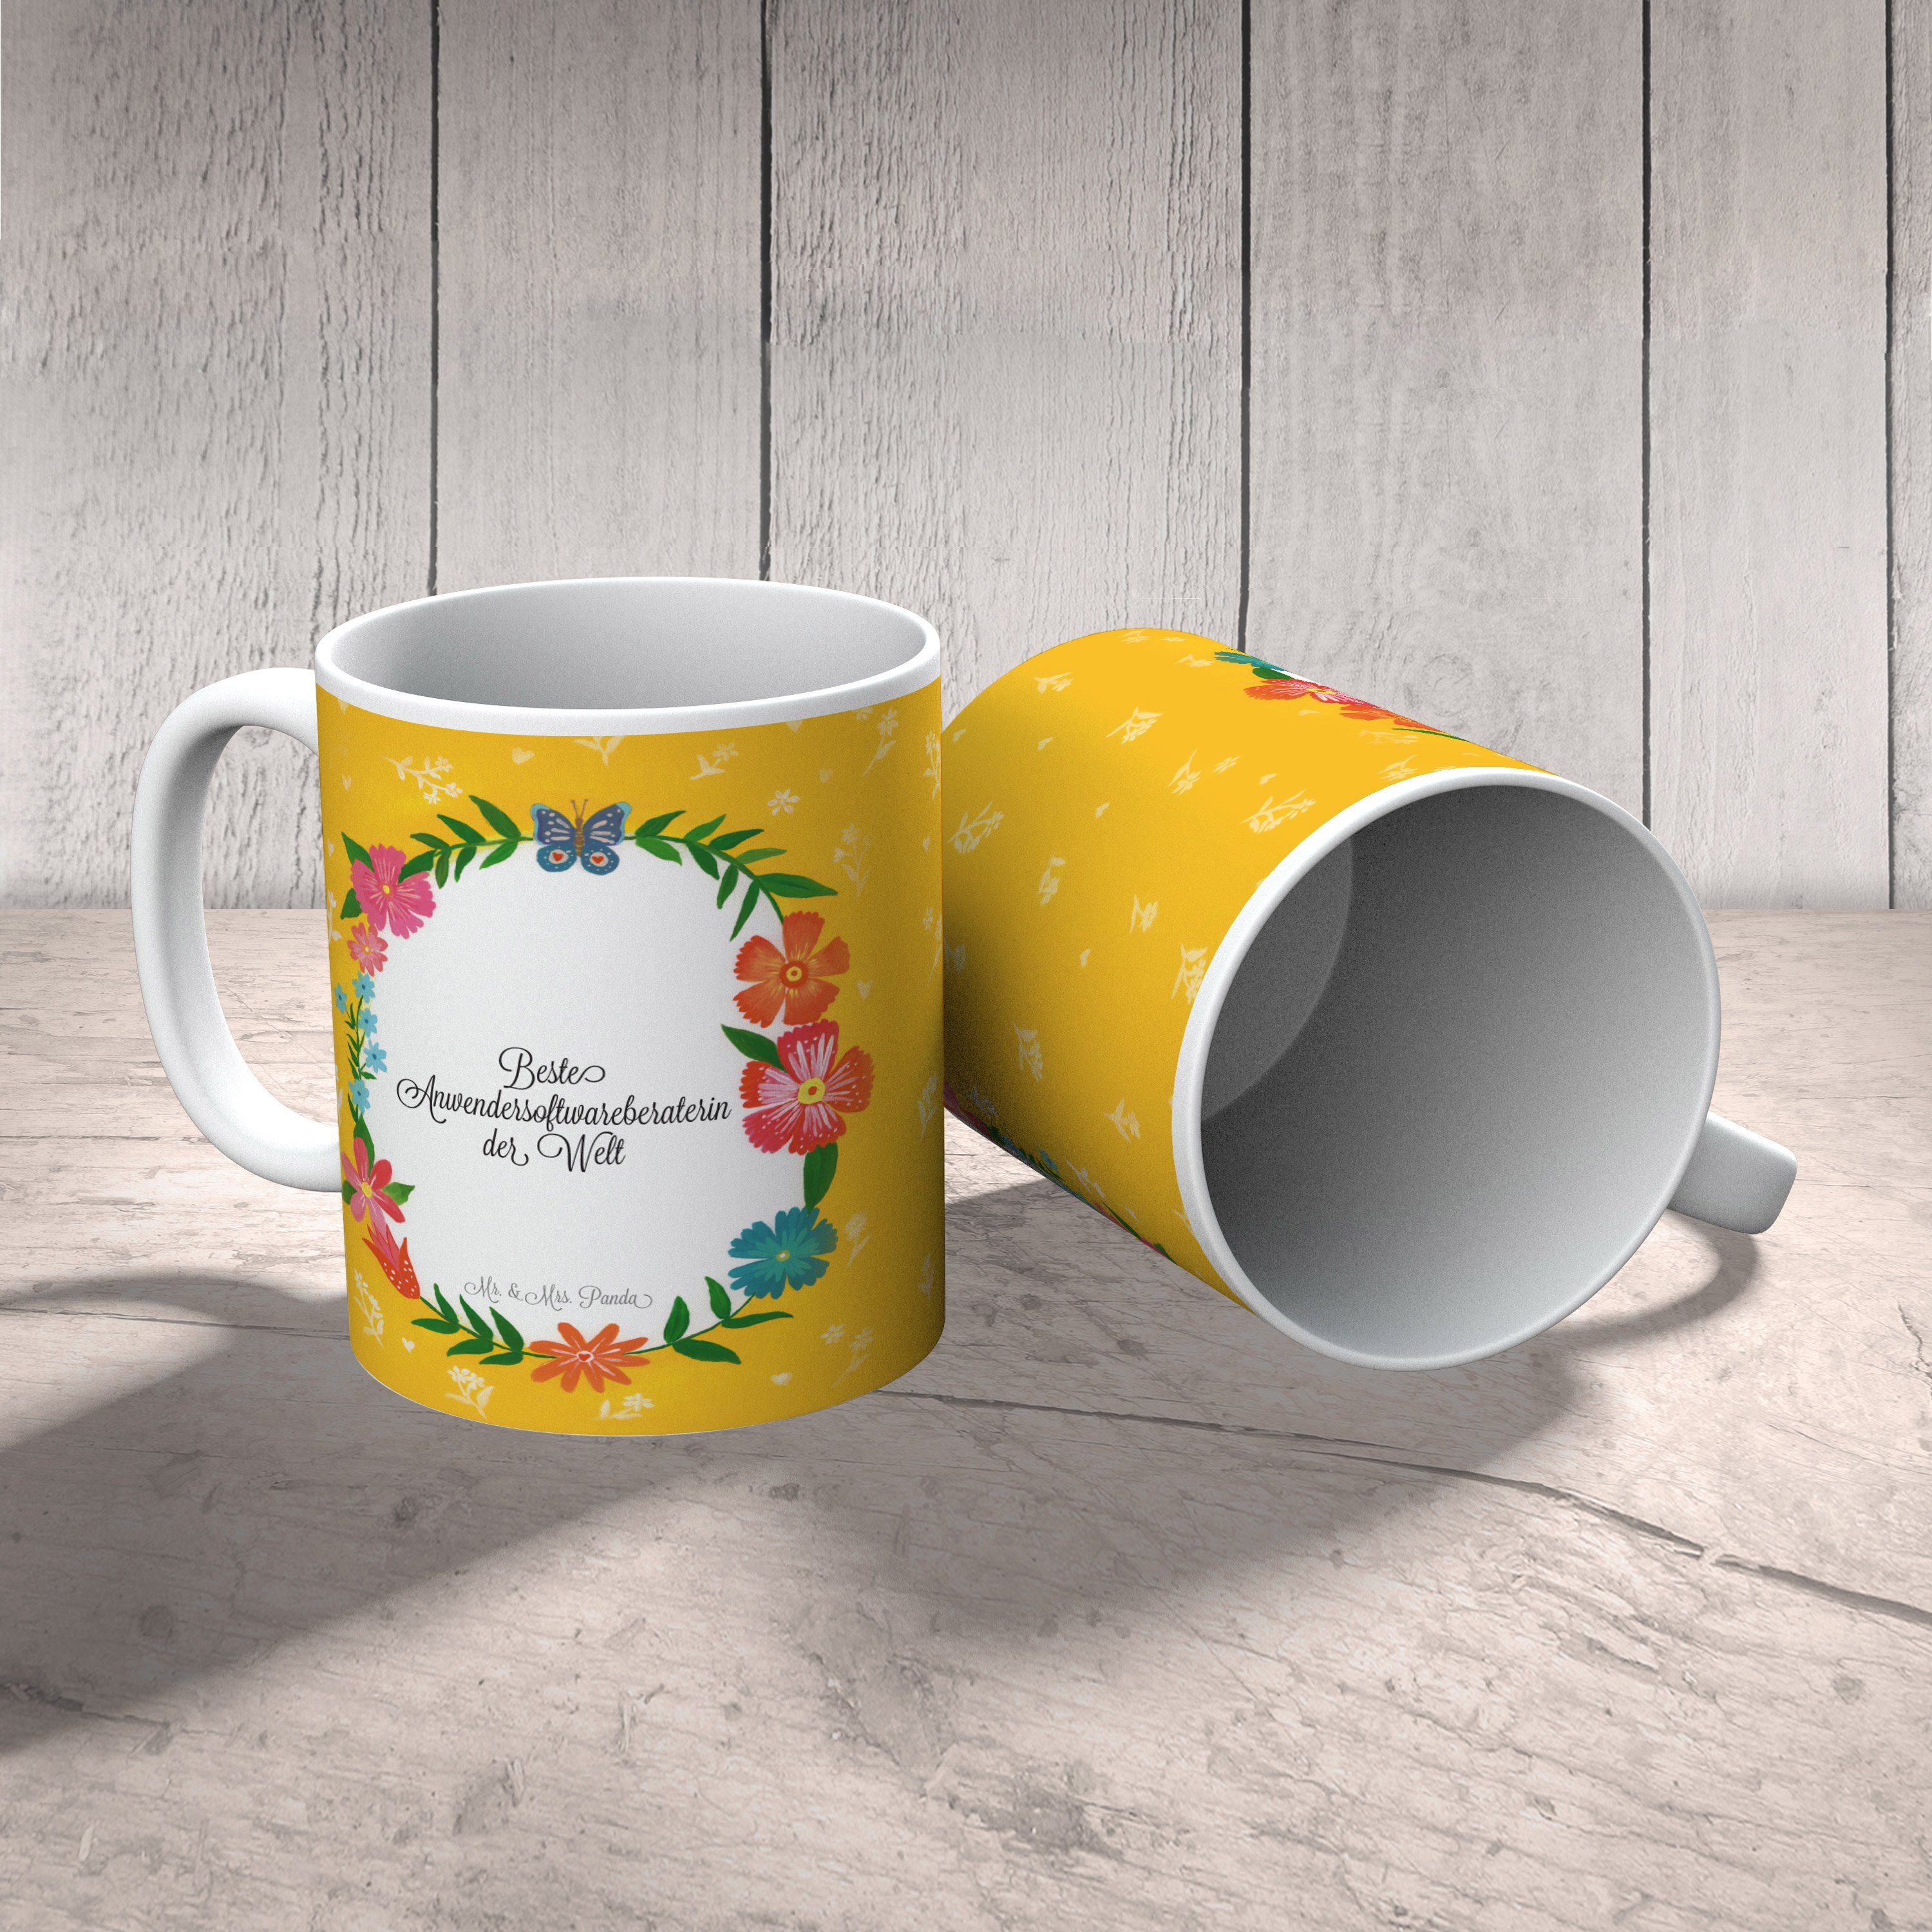 Mr. & Mrs. Panda Porzellan, Tasse Keramik Tasse Motive, - Anwendersoftwareberaterin Geschenk, Becher